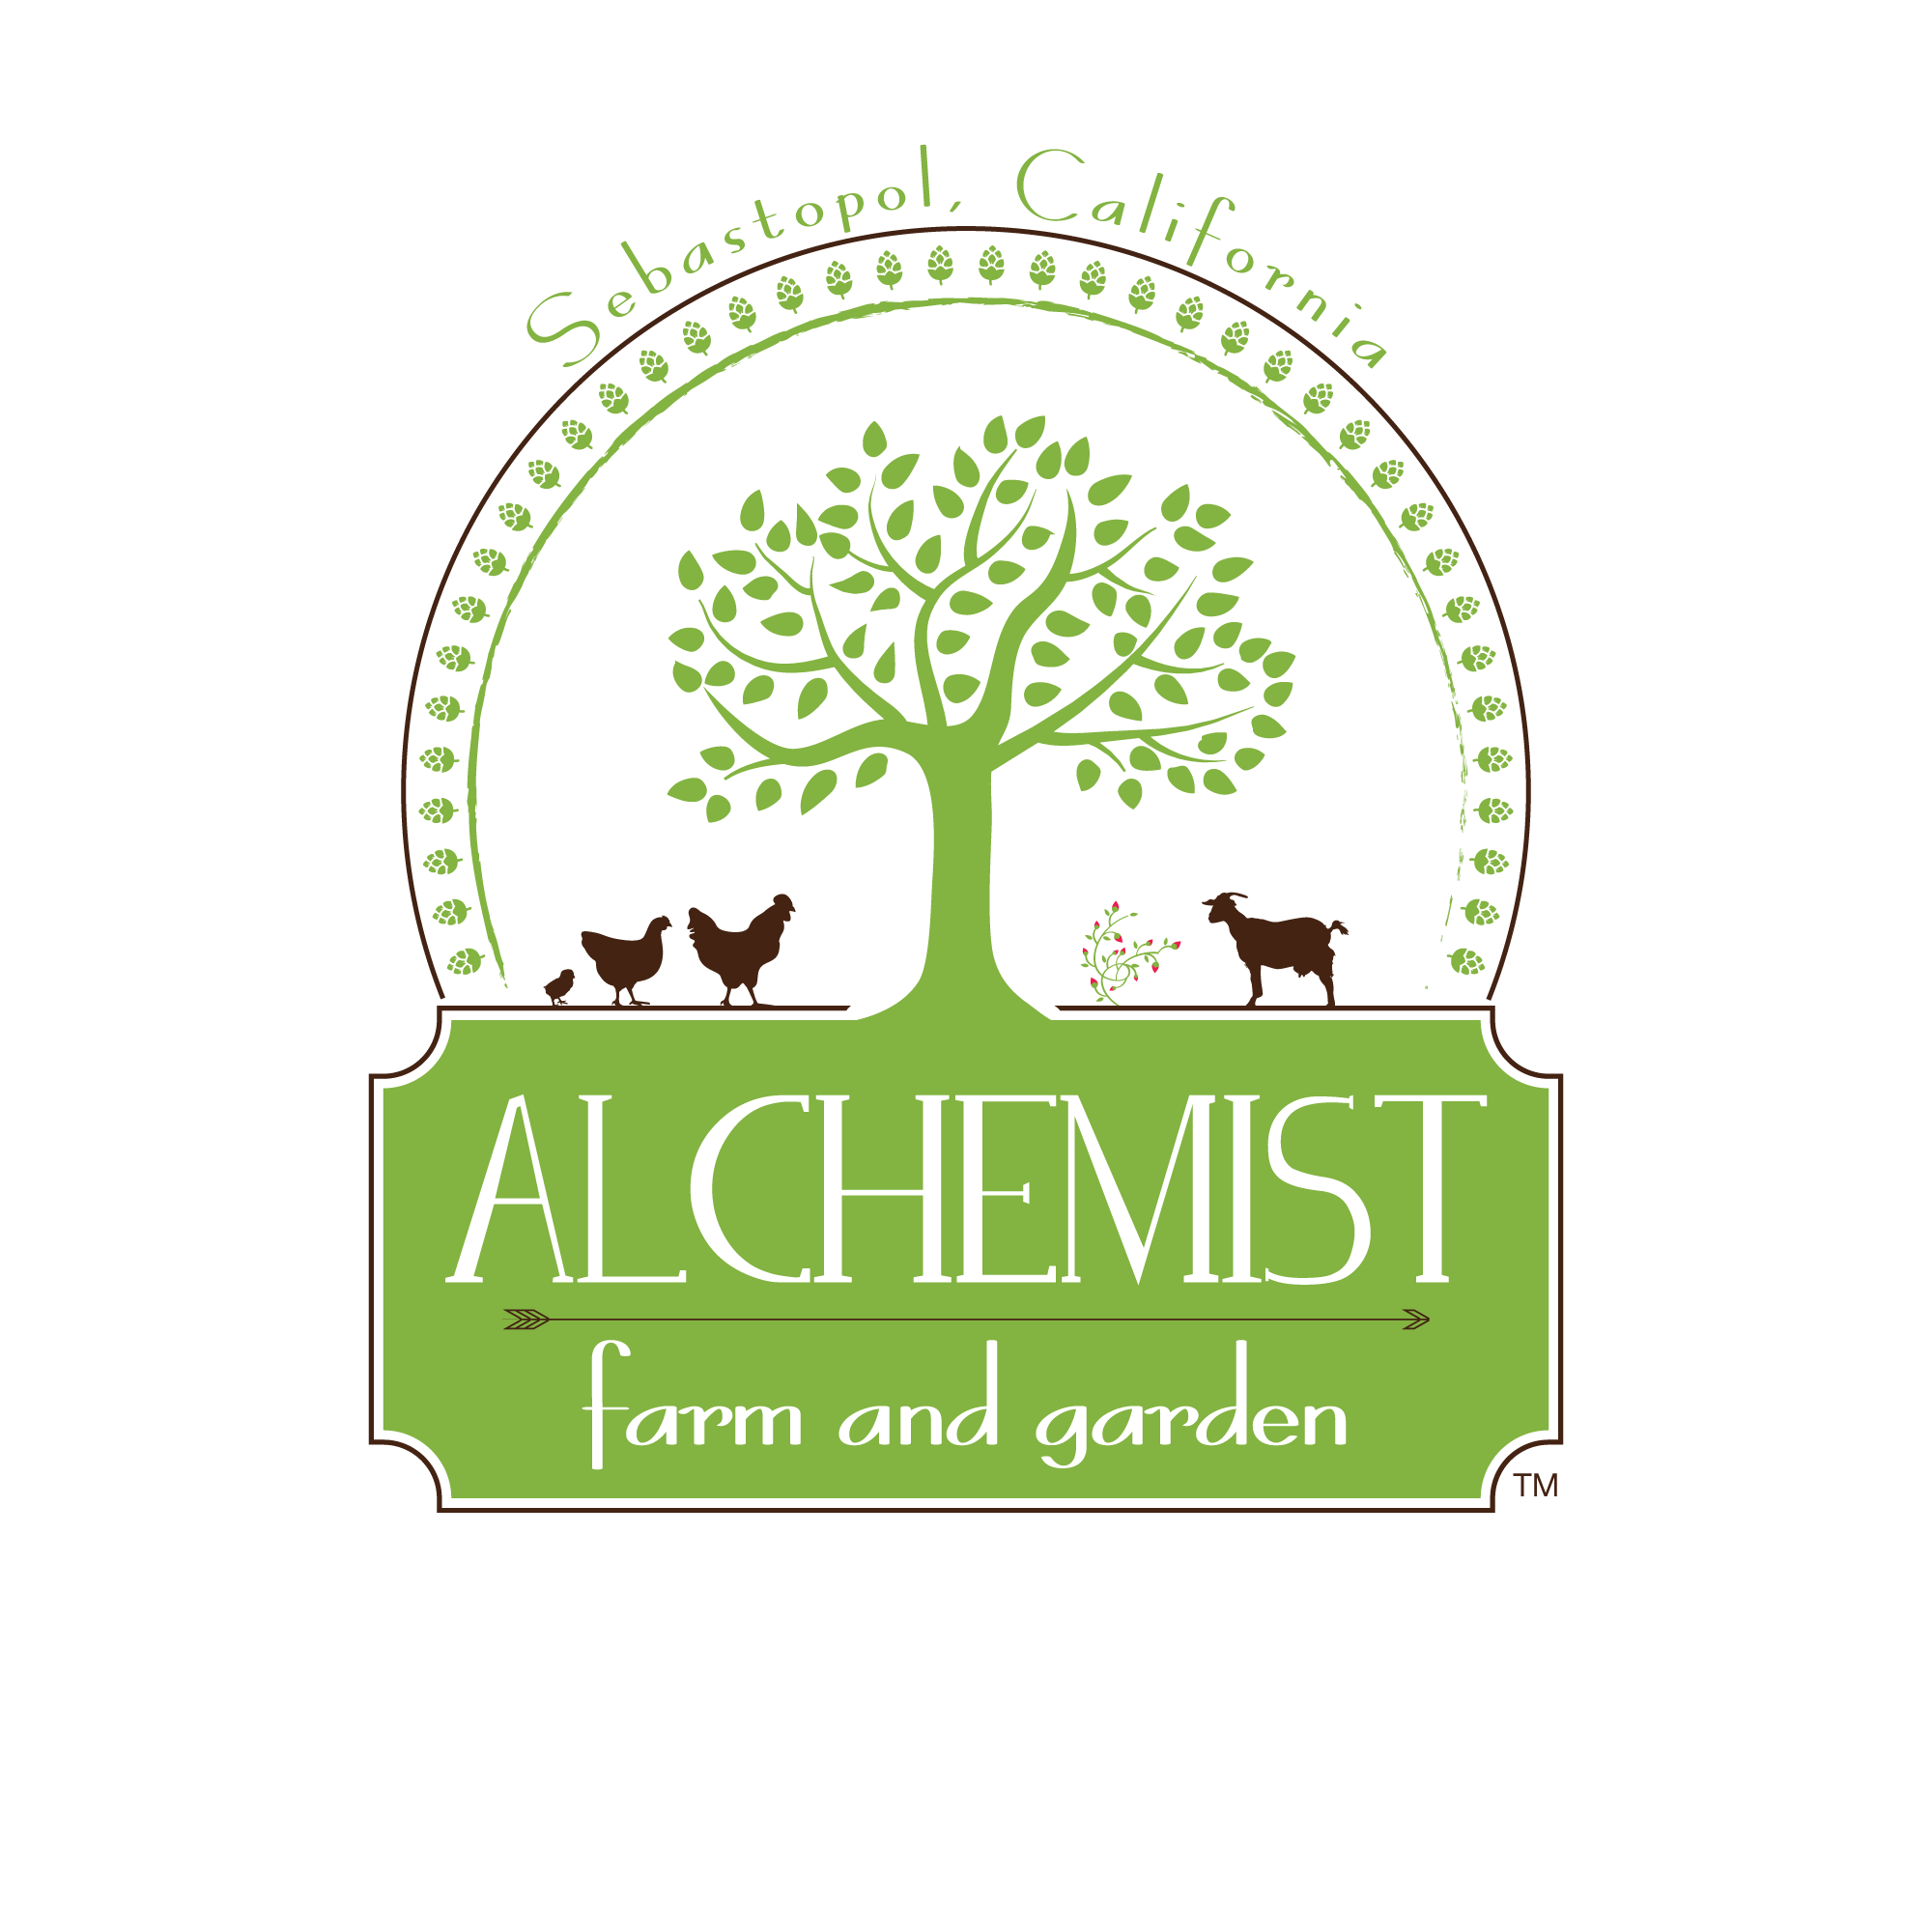 Alchemist Farm